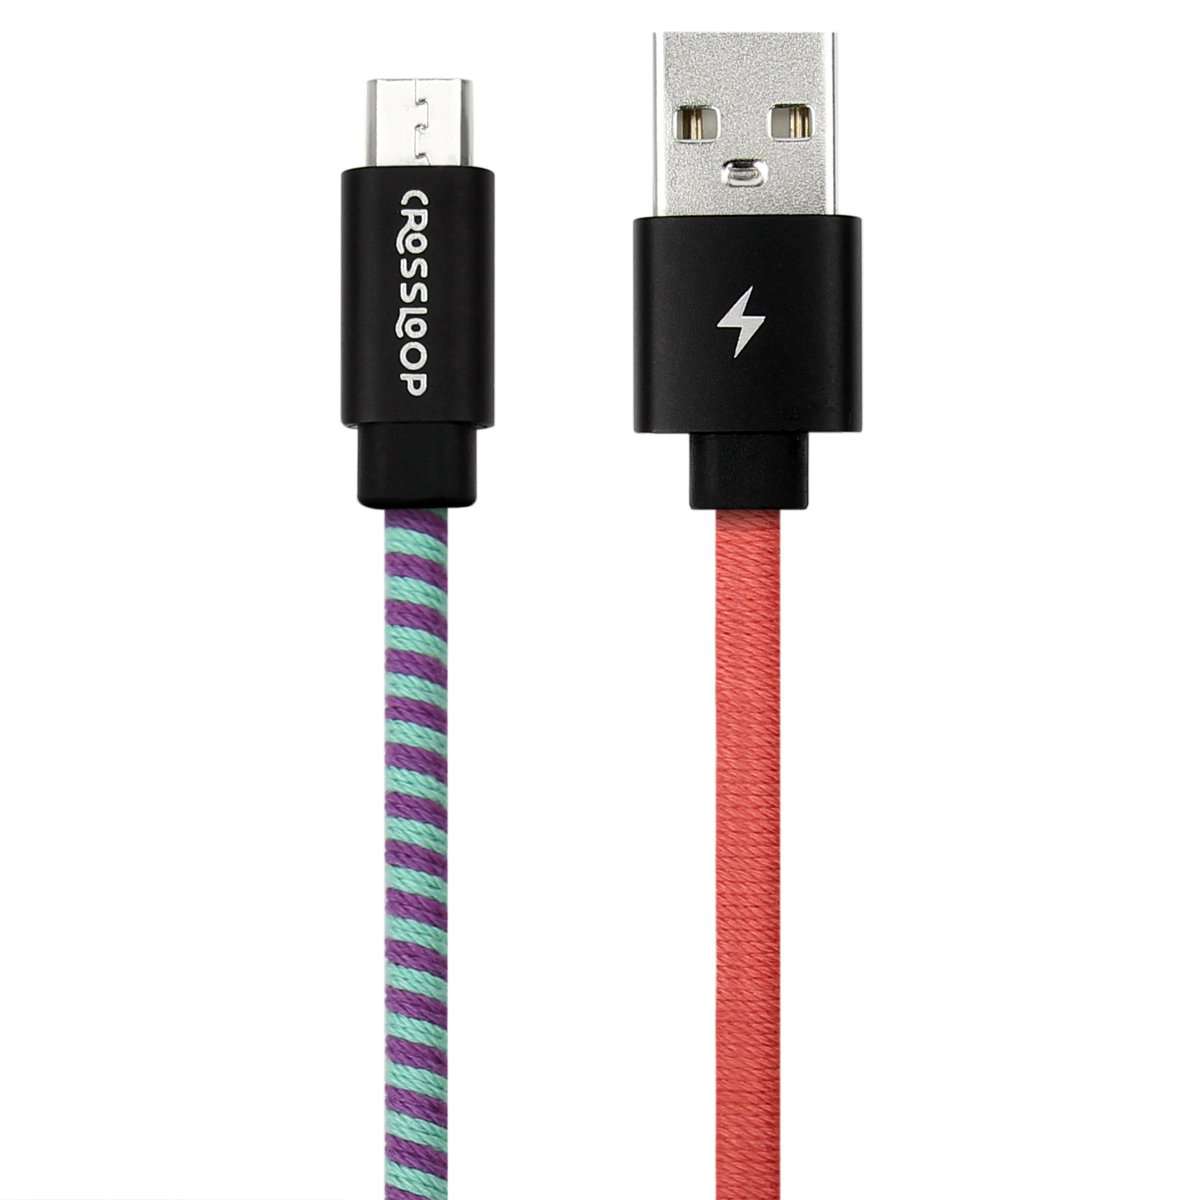 Crossloop Fast Charging Micro USB Cable In purple & sea green